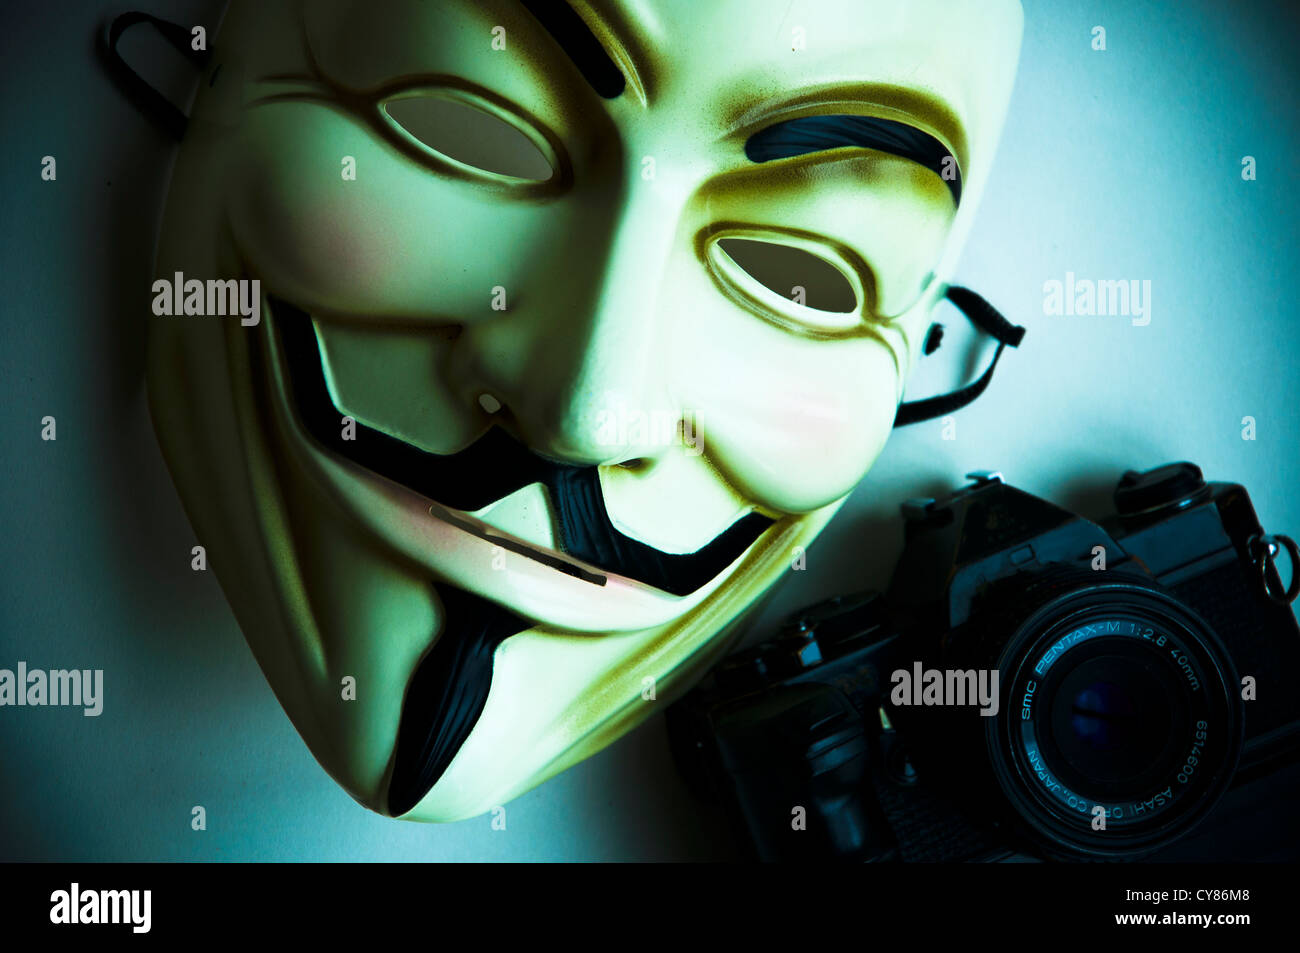 Vendetta masque Guy Fawkes v anonyme avec l'appareil photo Banque D'Images